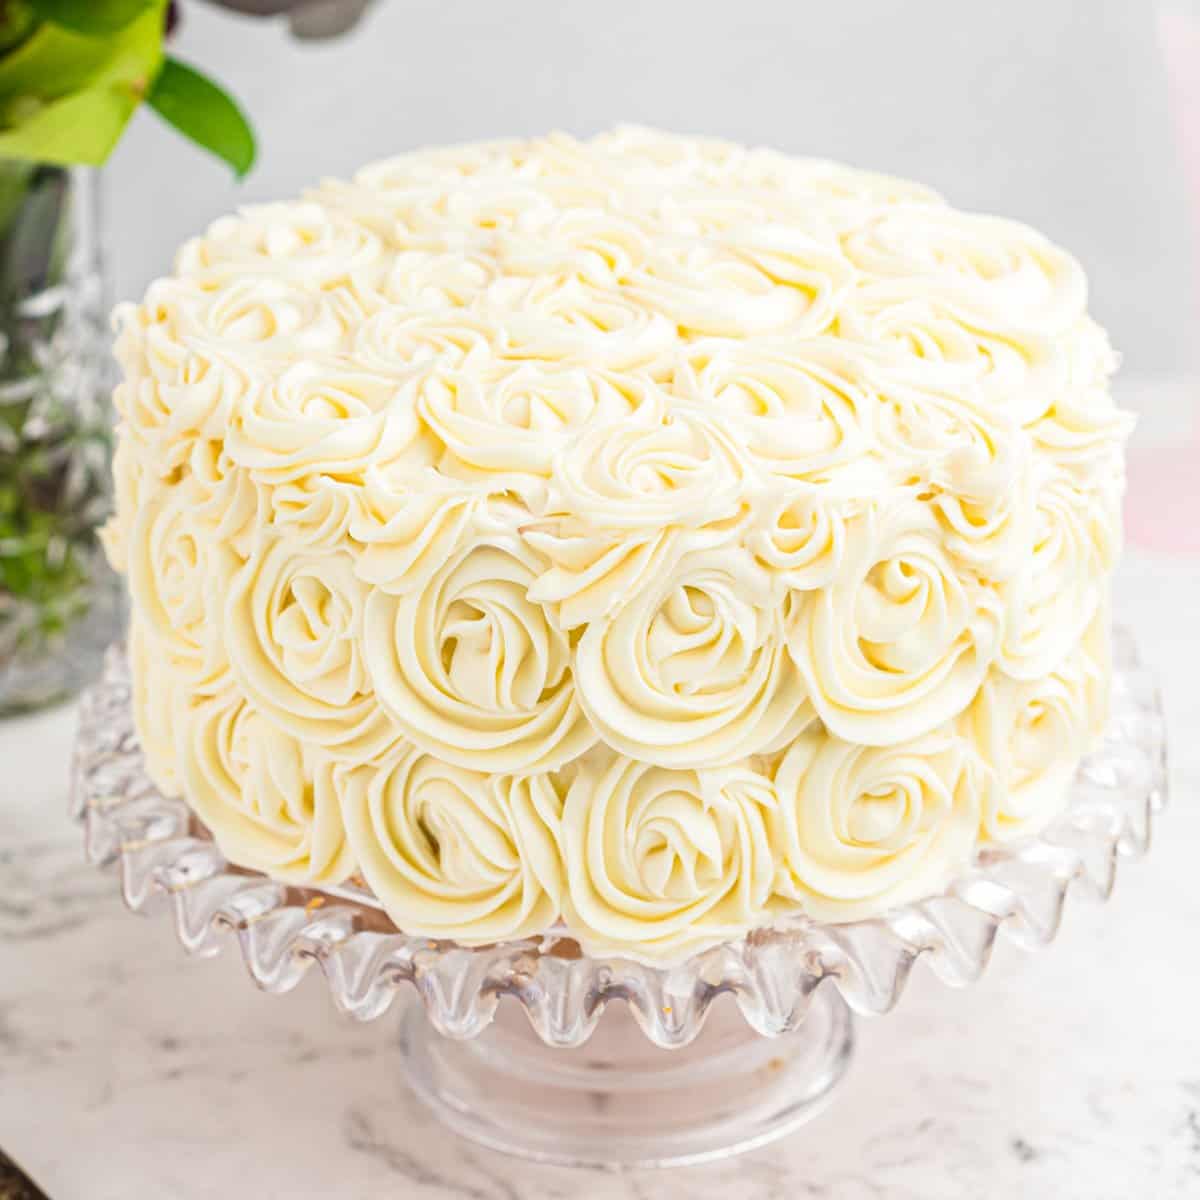 Easy Homemade Wedding Cake - Easy Dessert Recipes